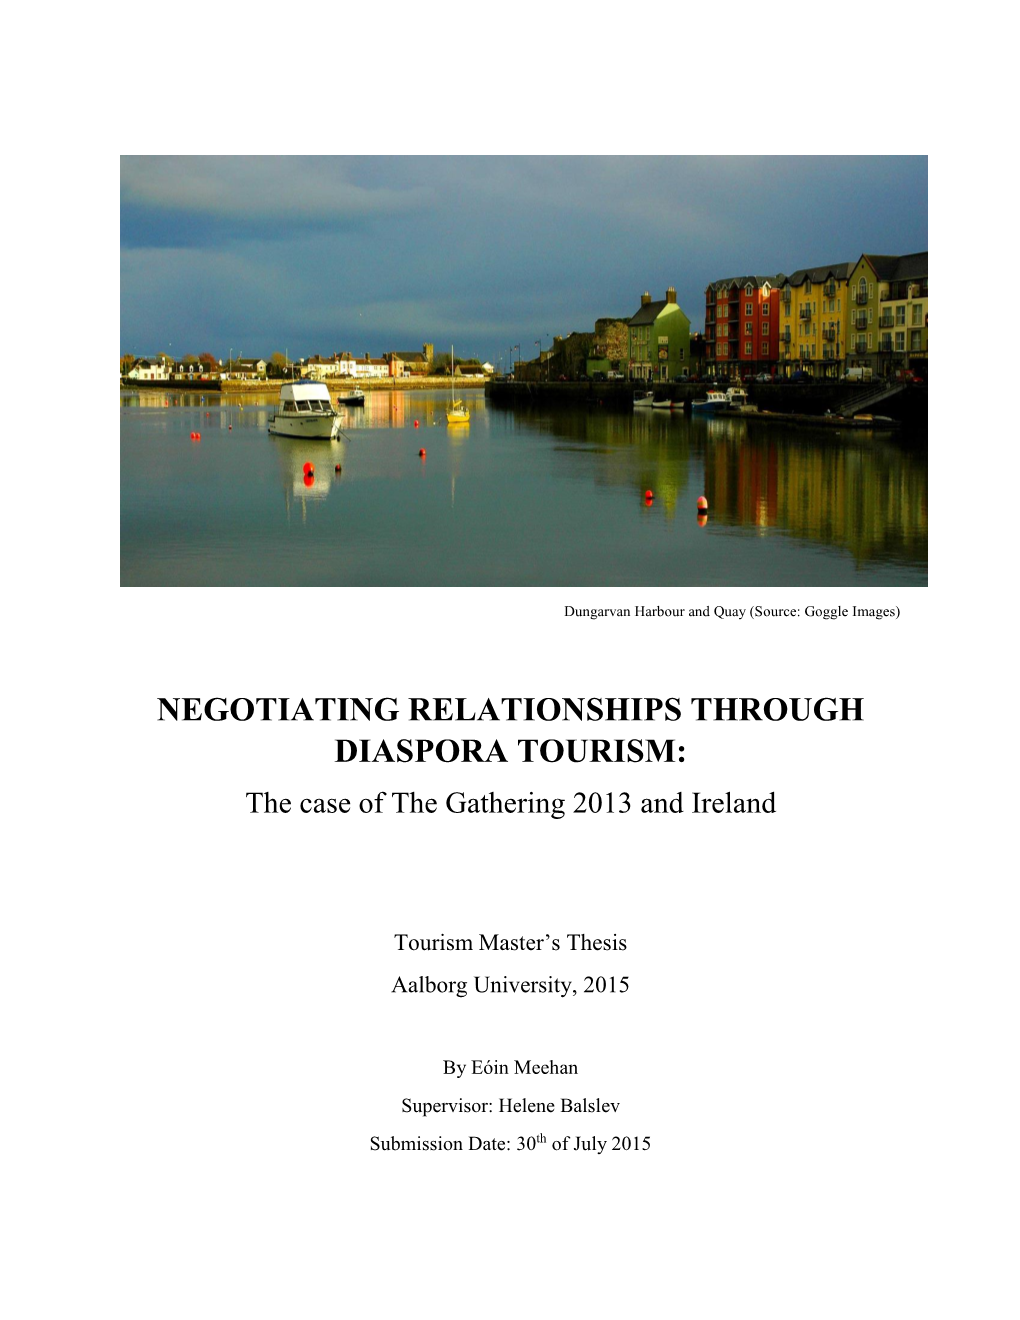 NEGOTIATING RELATIONSHIPS THROUGH DIASPORA TOURISM: the Case of the Gathering 2013 and Ireland